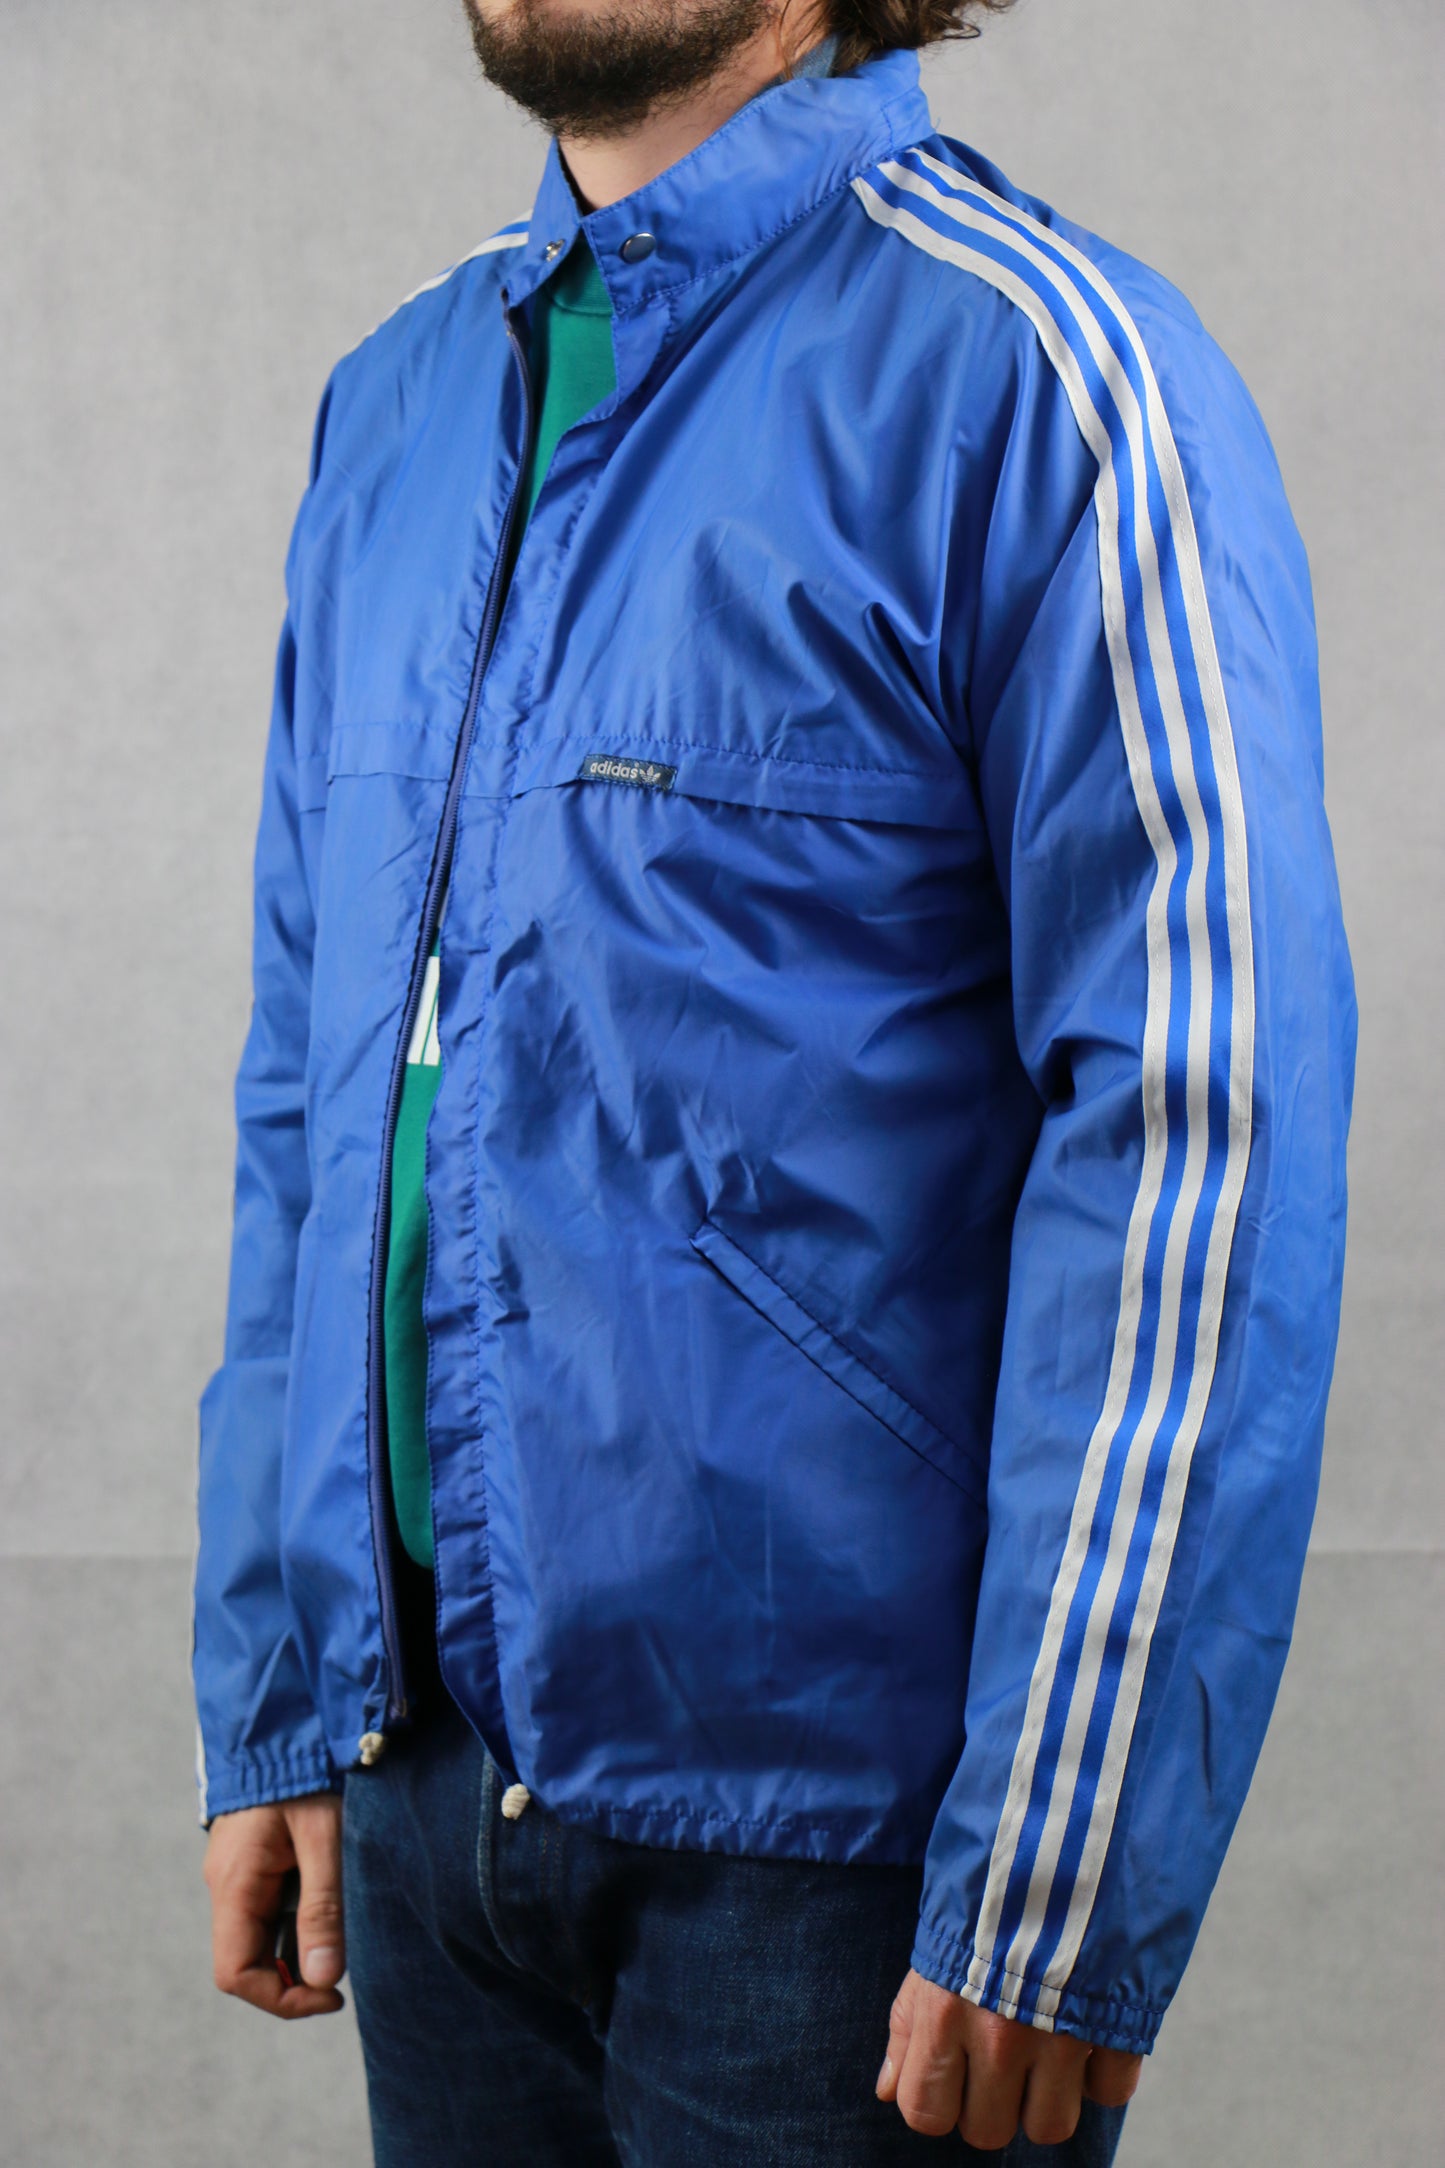 Adidas Rain Jacket Blue - vintage clothing clochard92.com